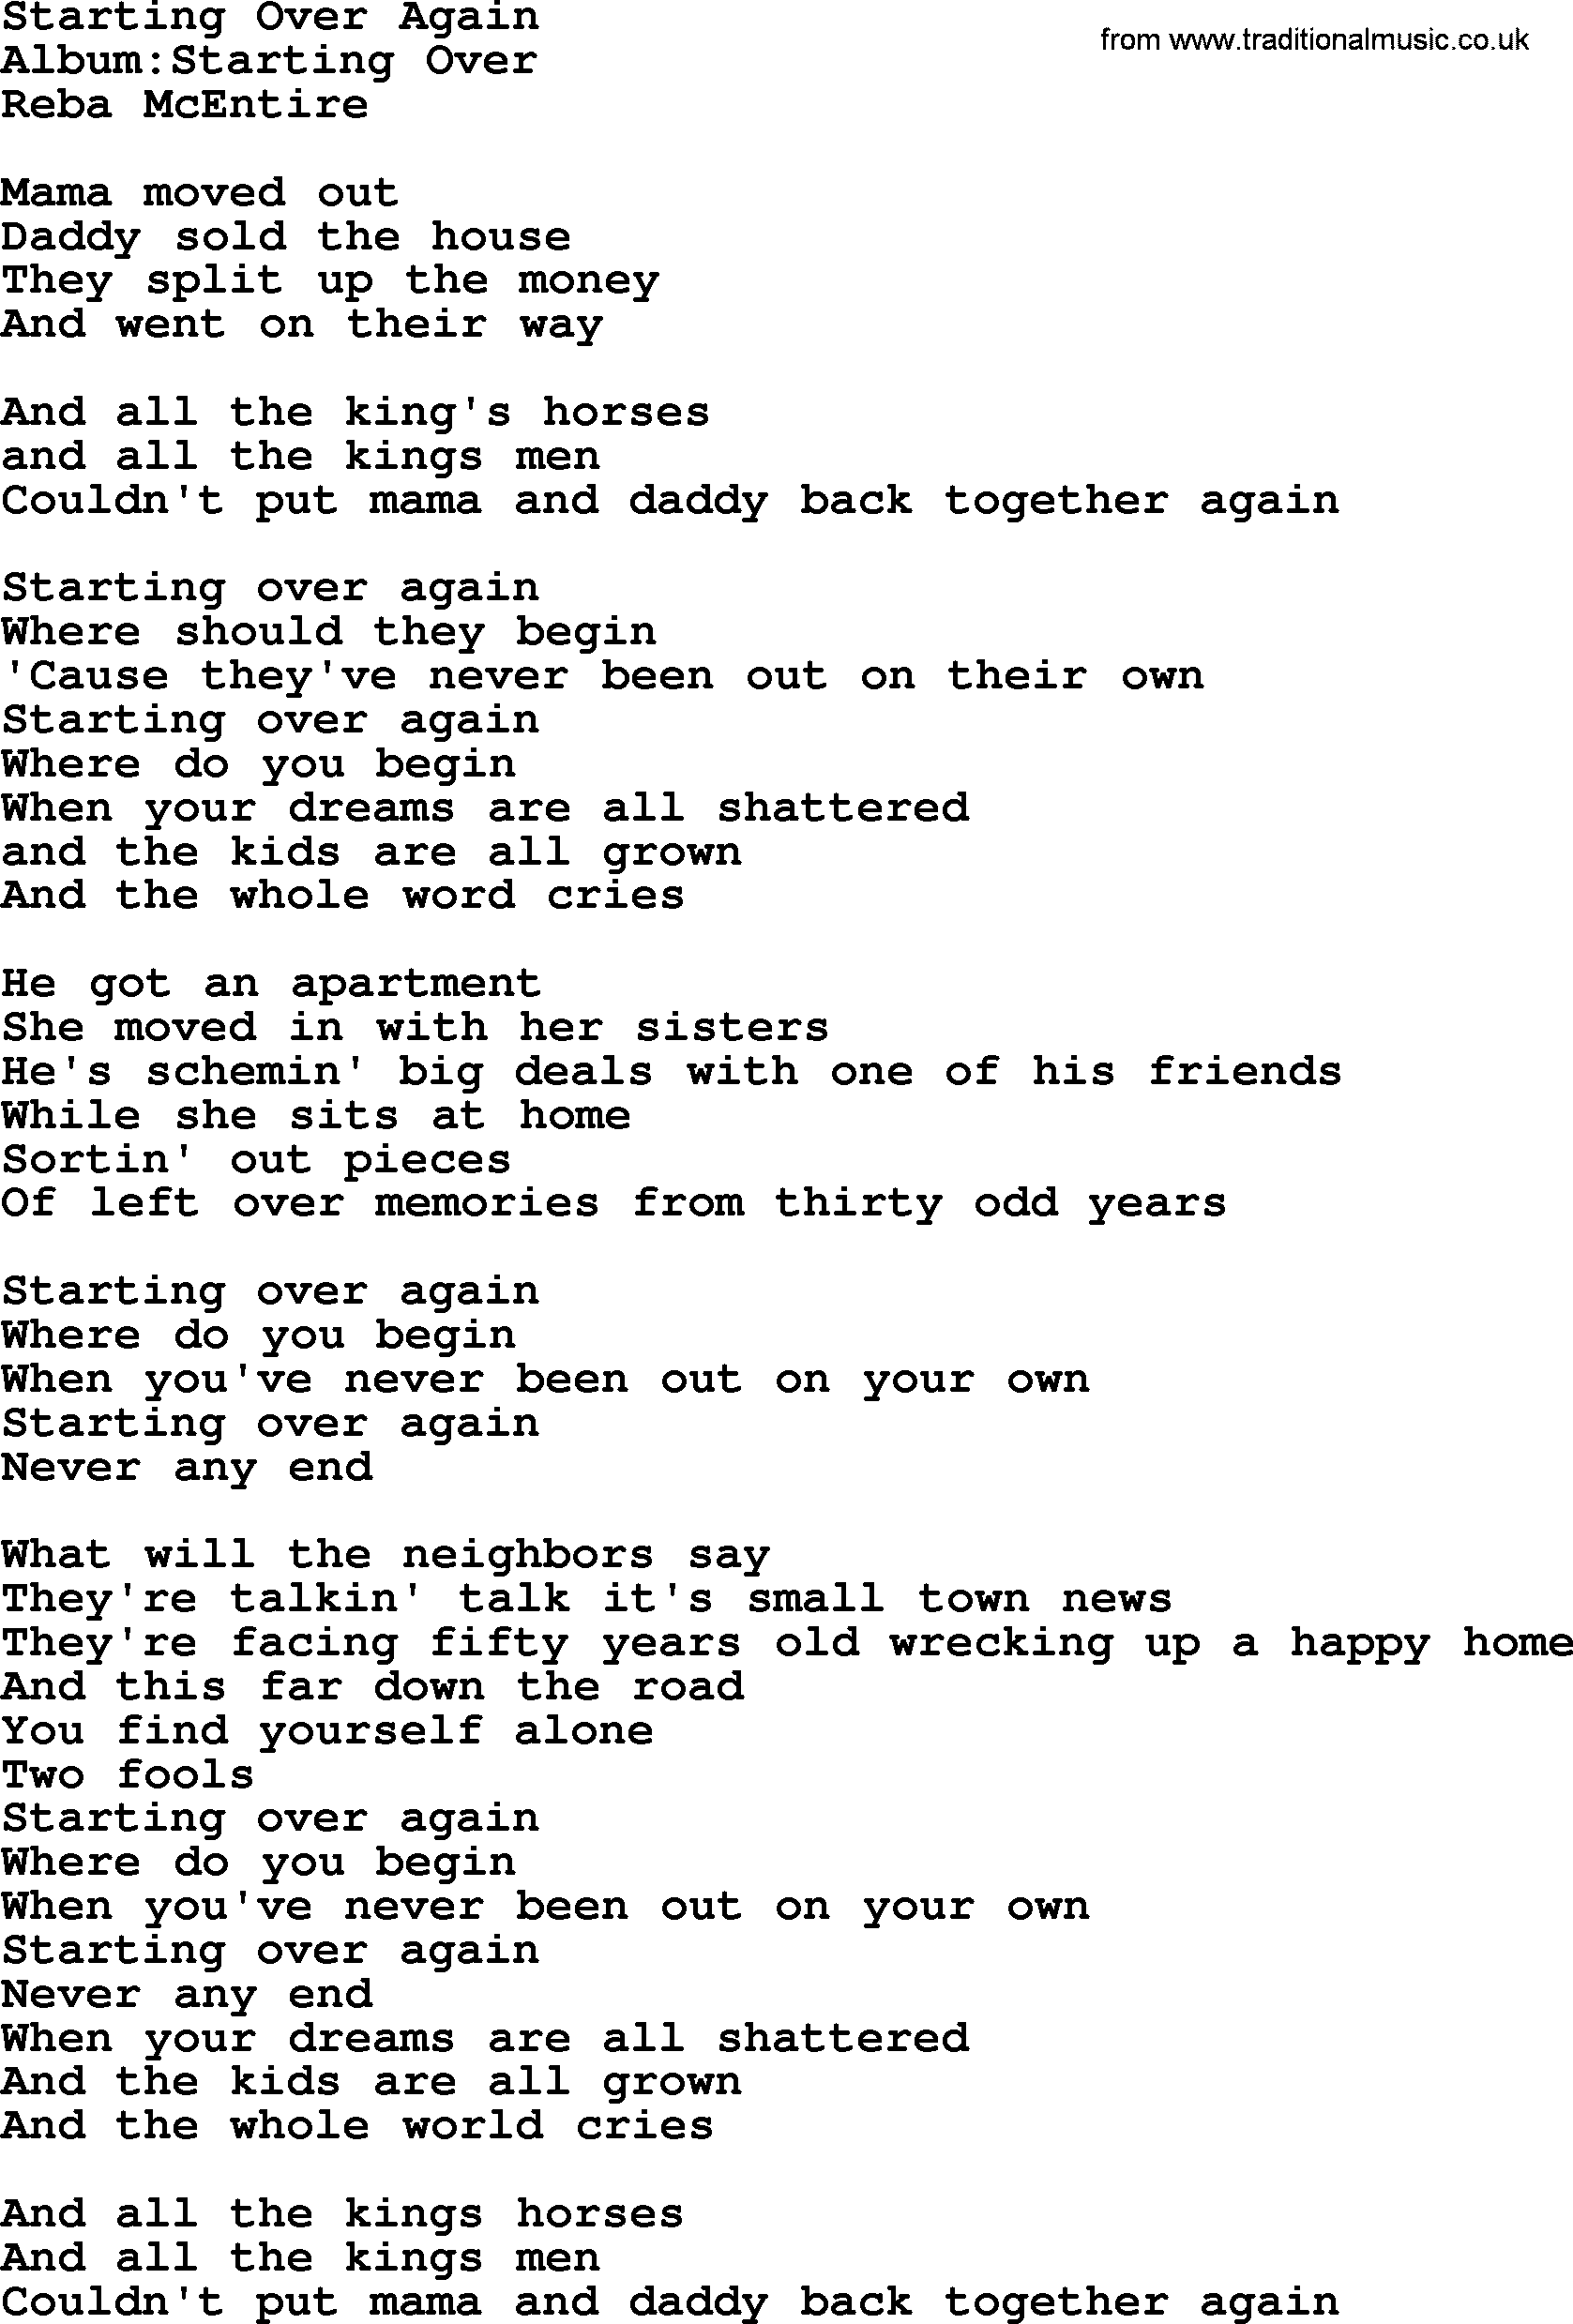 Reba McEntire song: Starting Over Again lyrics